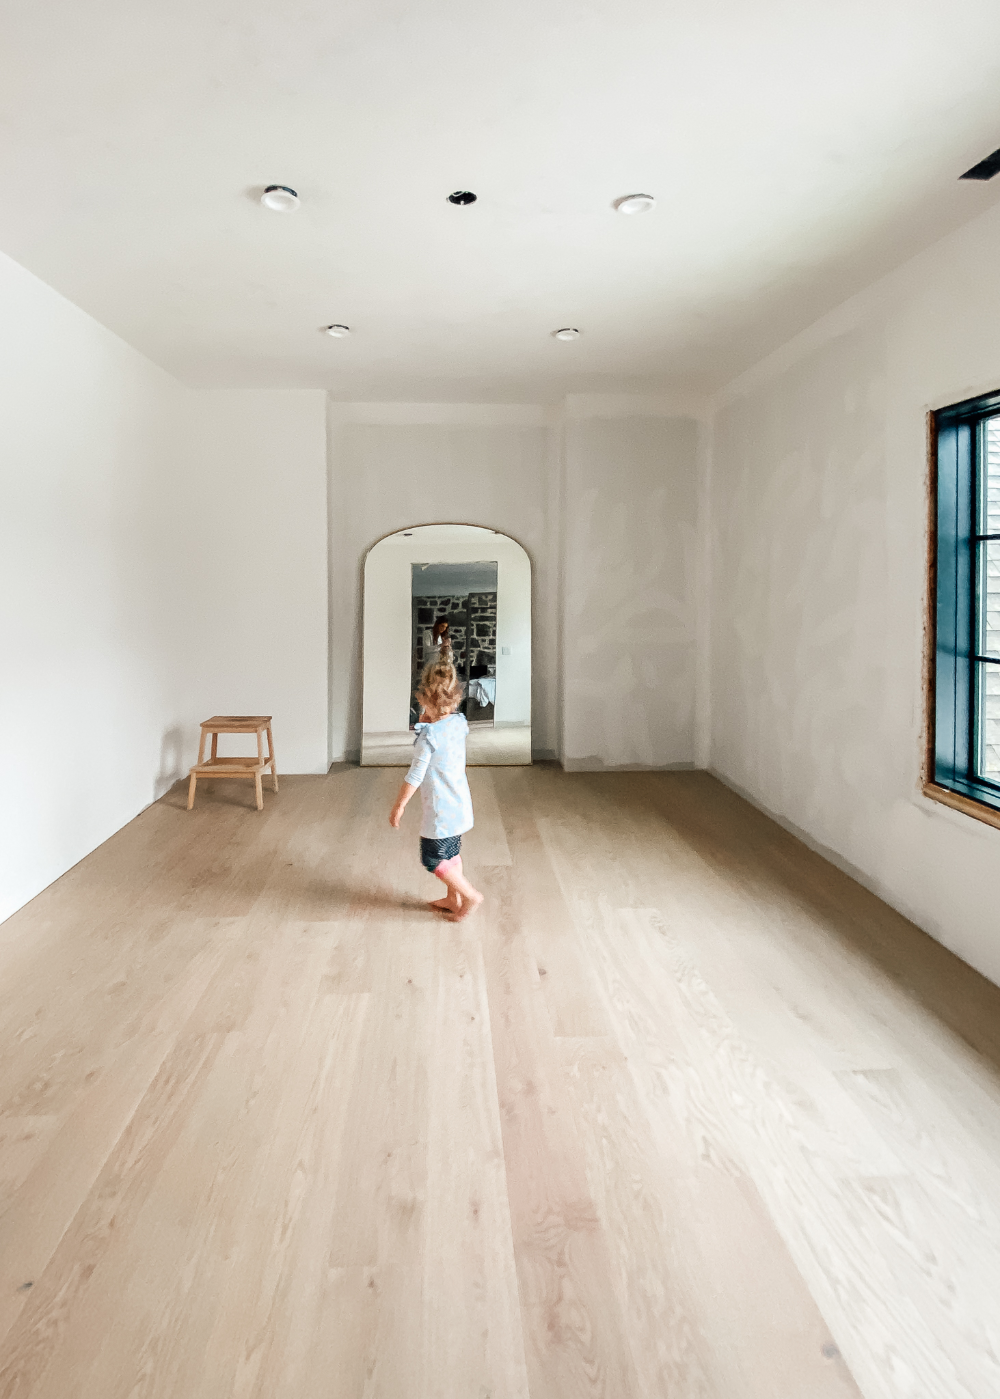 Why wood laminate flooring is preferred over hardwood flooring?